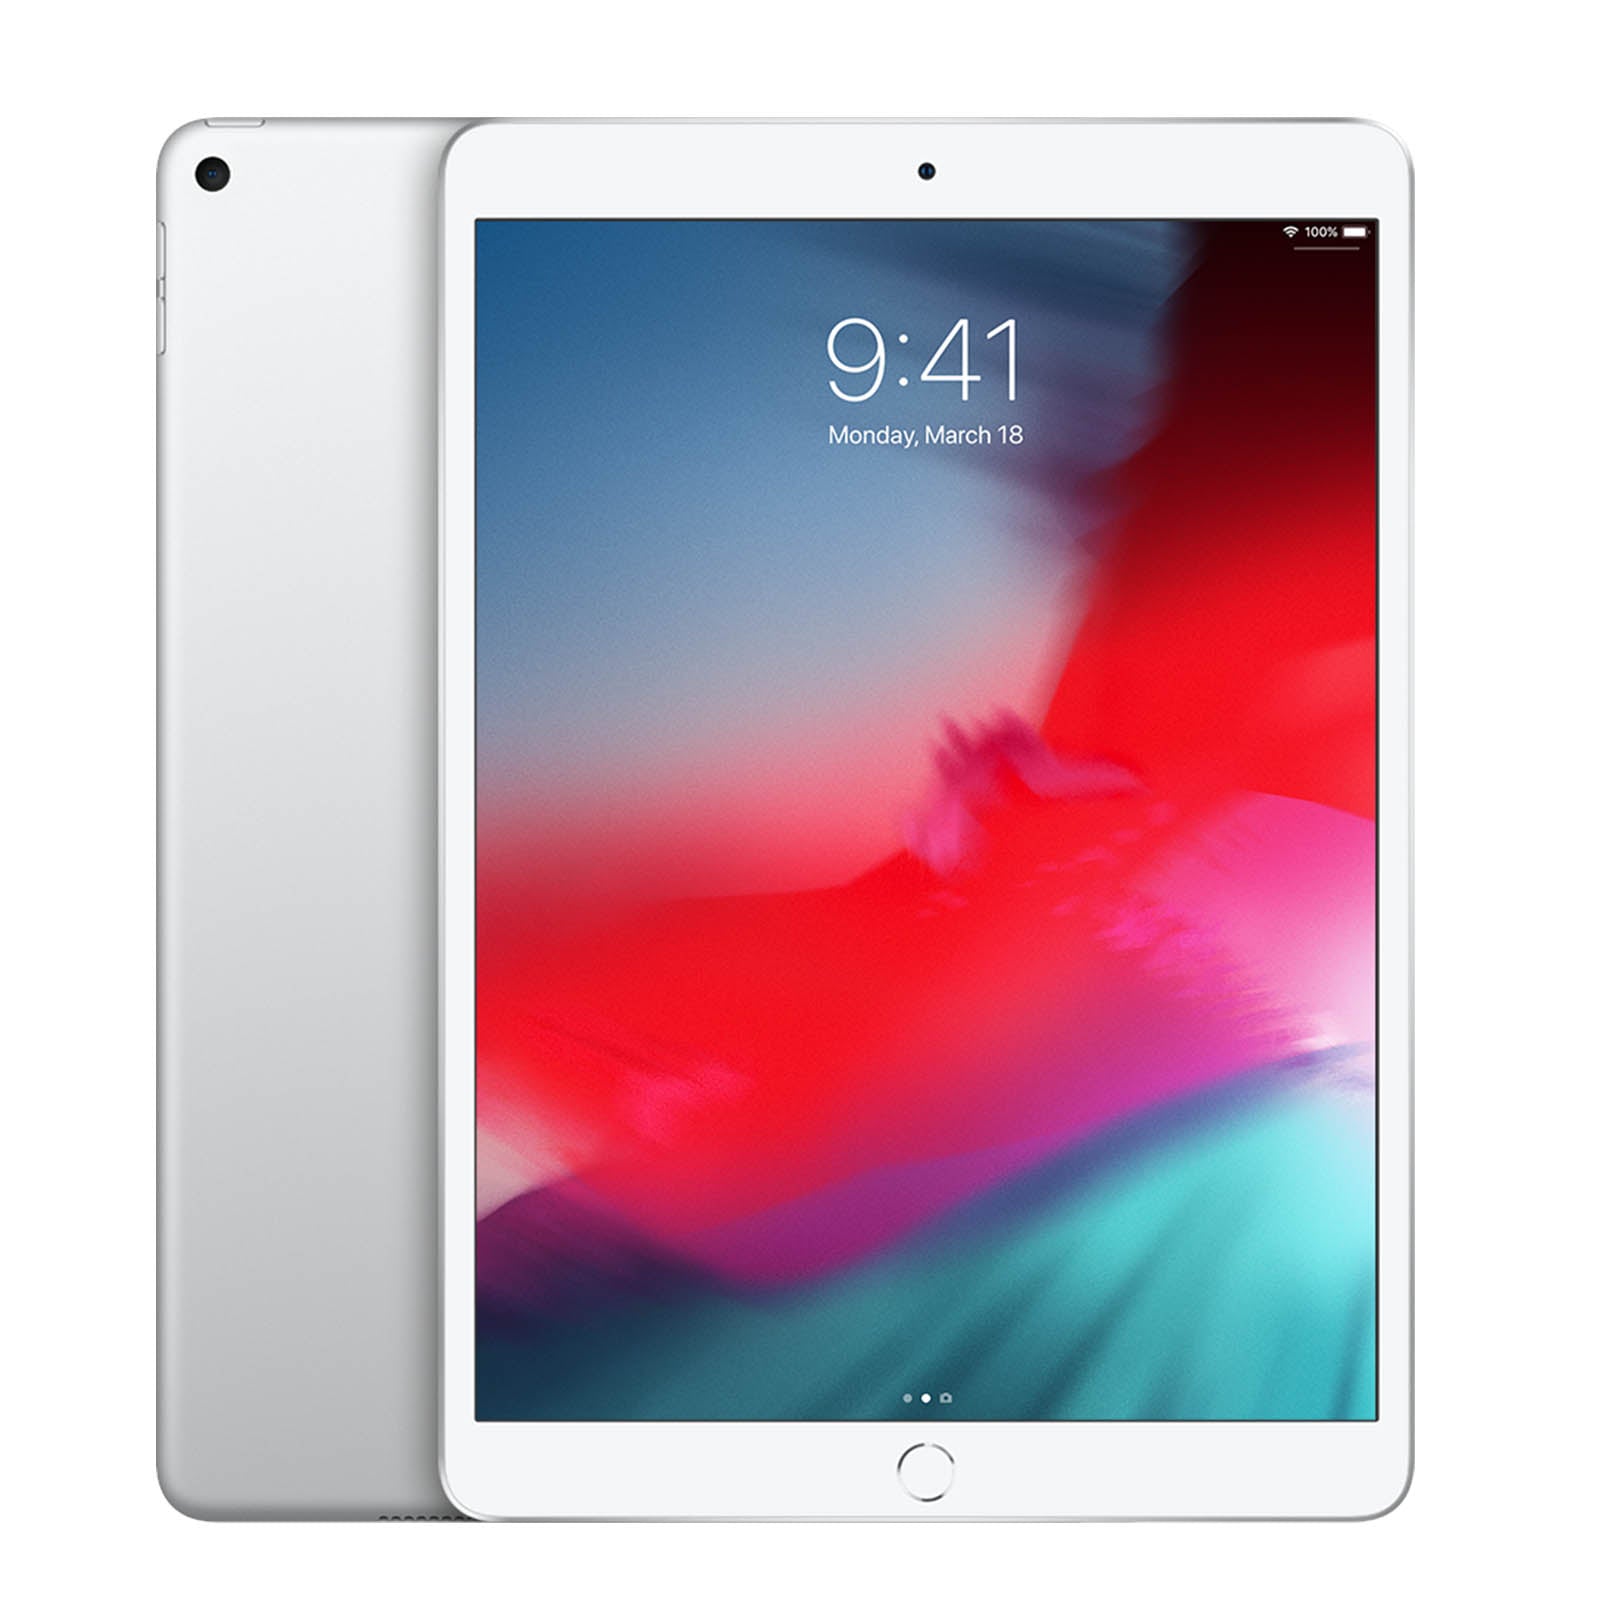 Apple iPad Air 3 256GB Wifi Silver - Very Good